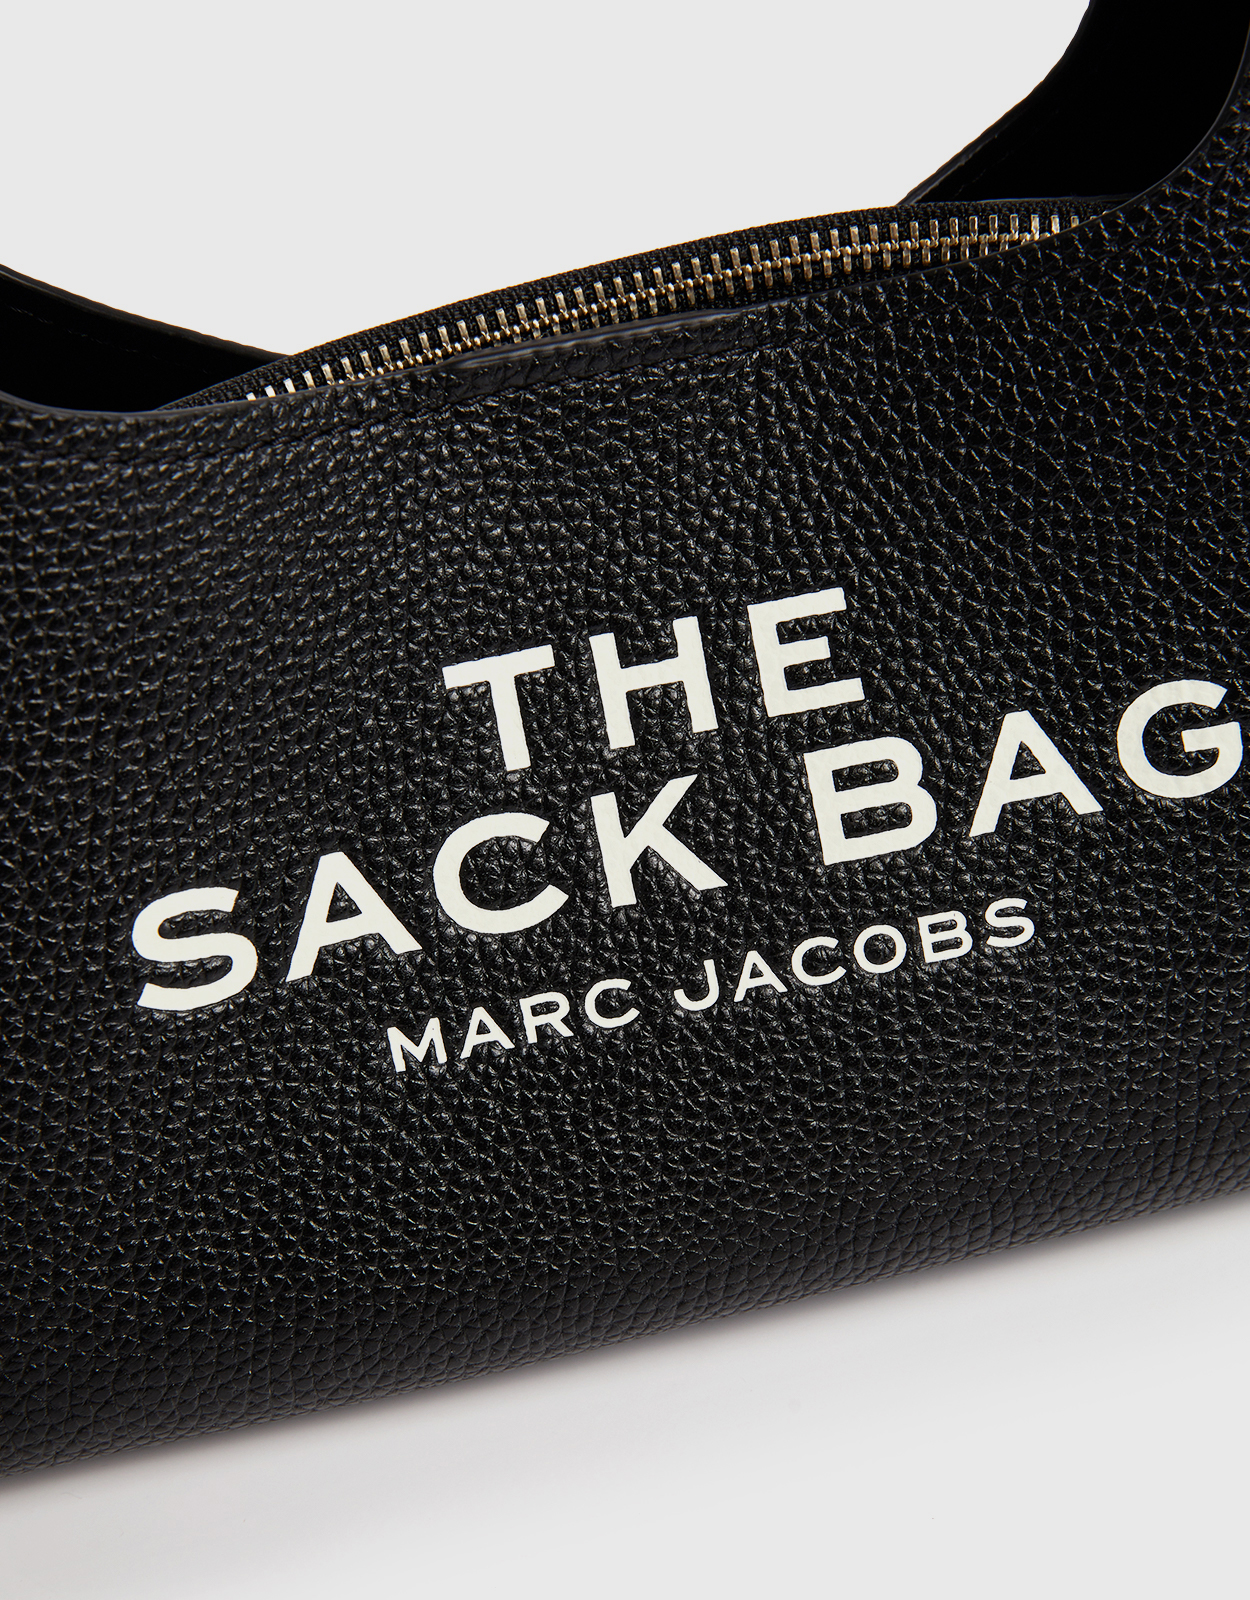 Women's The Mini Sack bag, MARC JACOBS